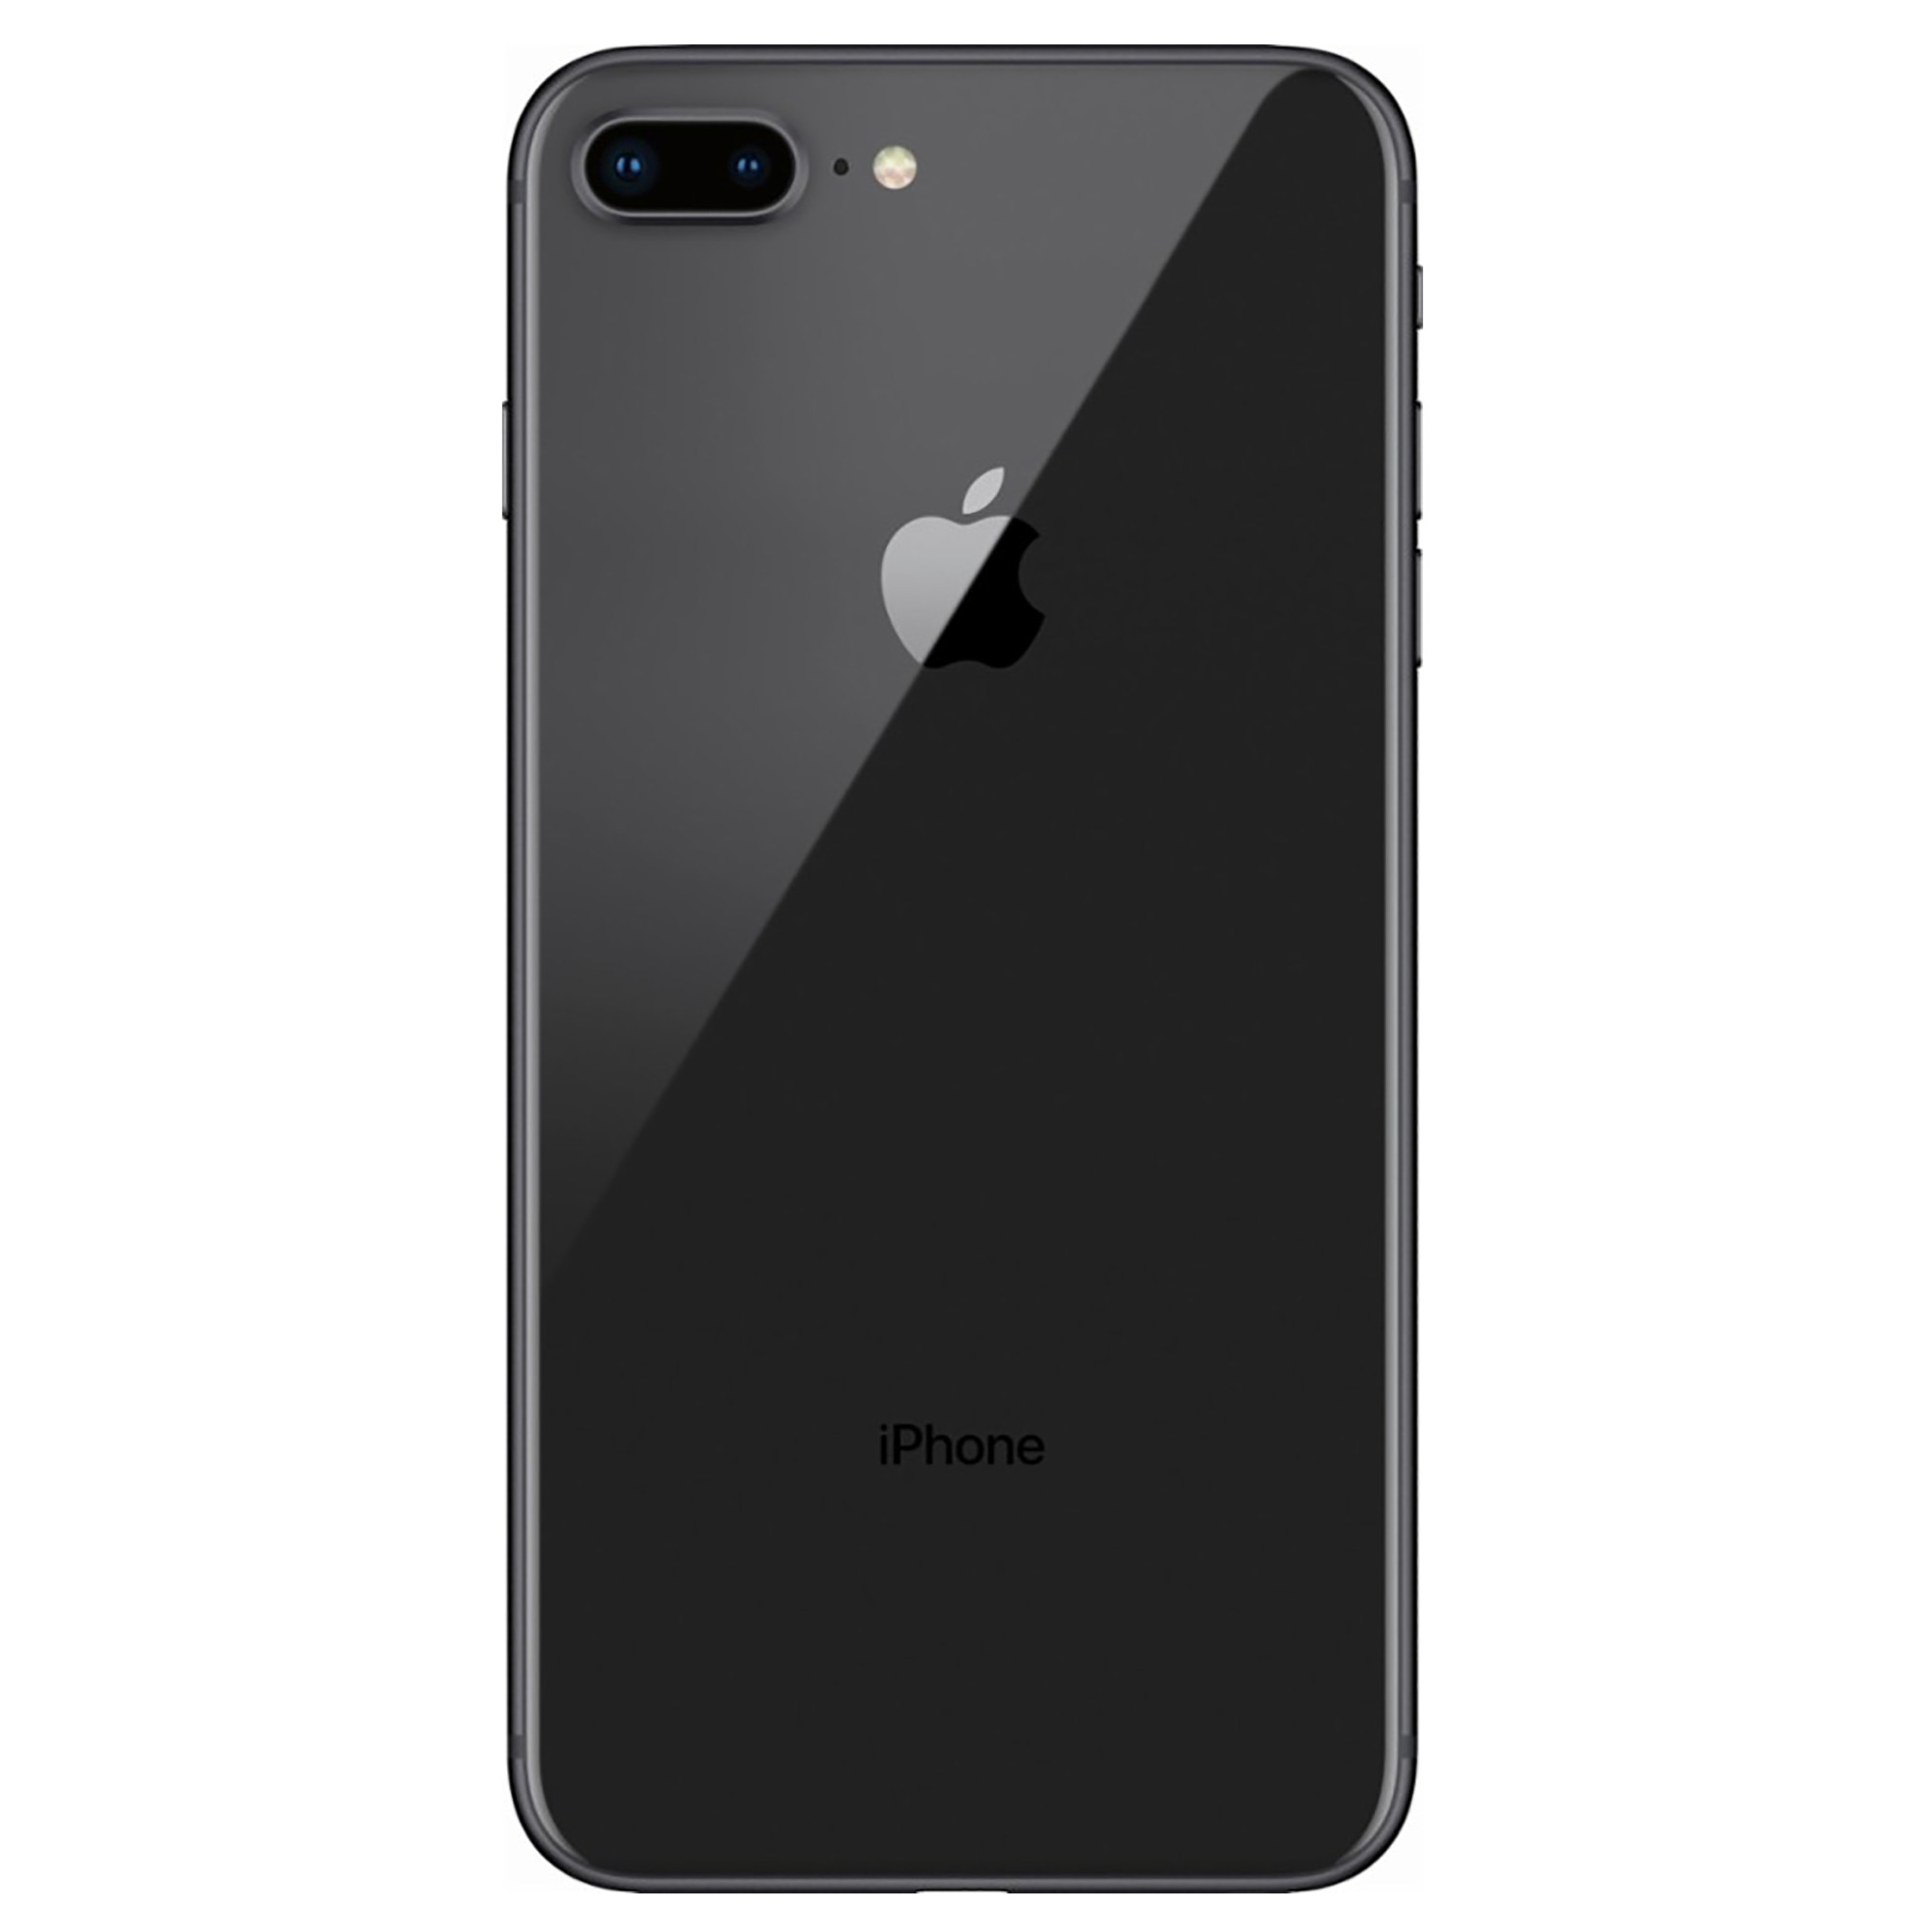 Restored Apple iPhone 8 Plus 64GB Factory Unlocked Smartphone Like New (Refurbished) - image 2 of 4